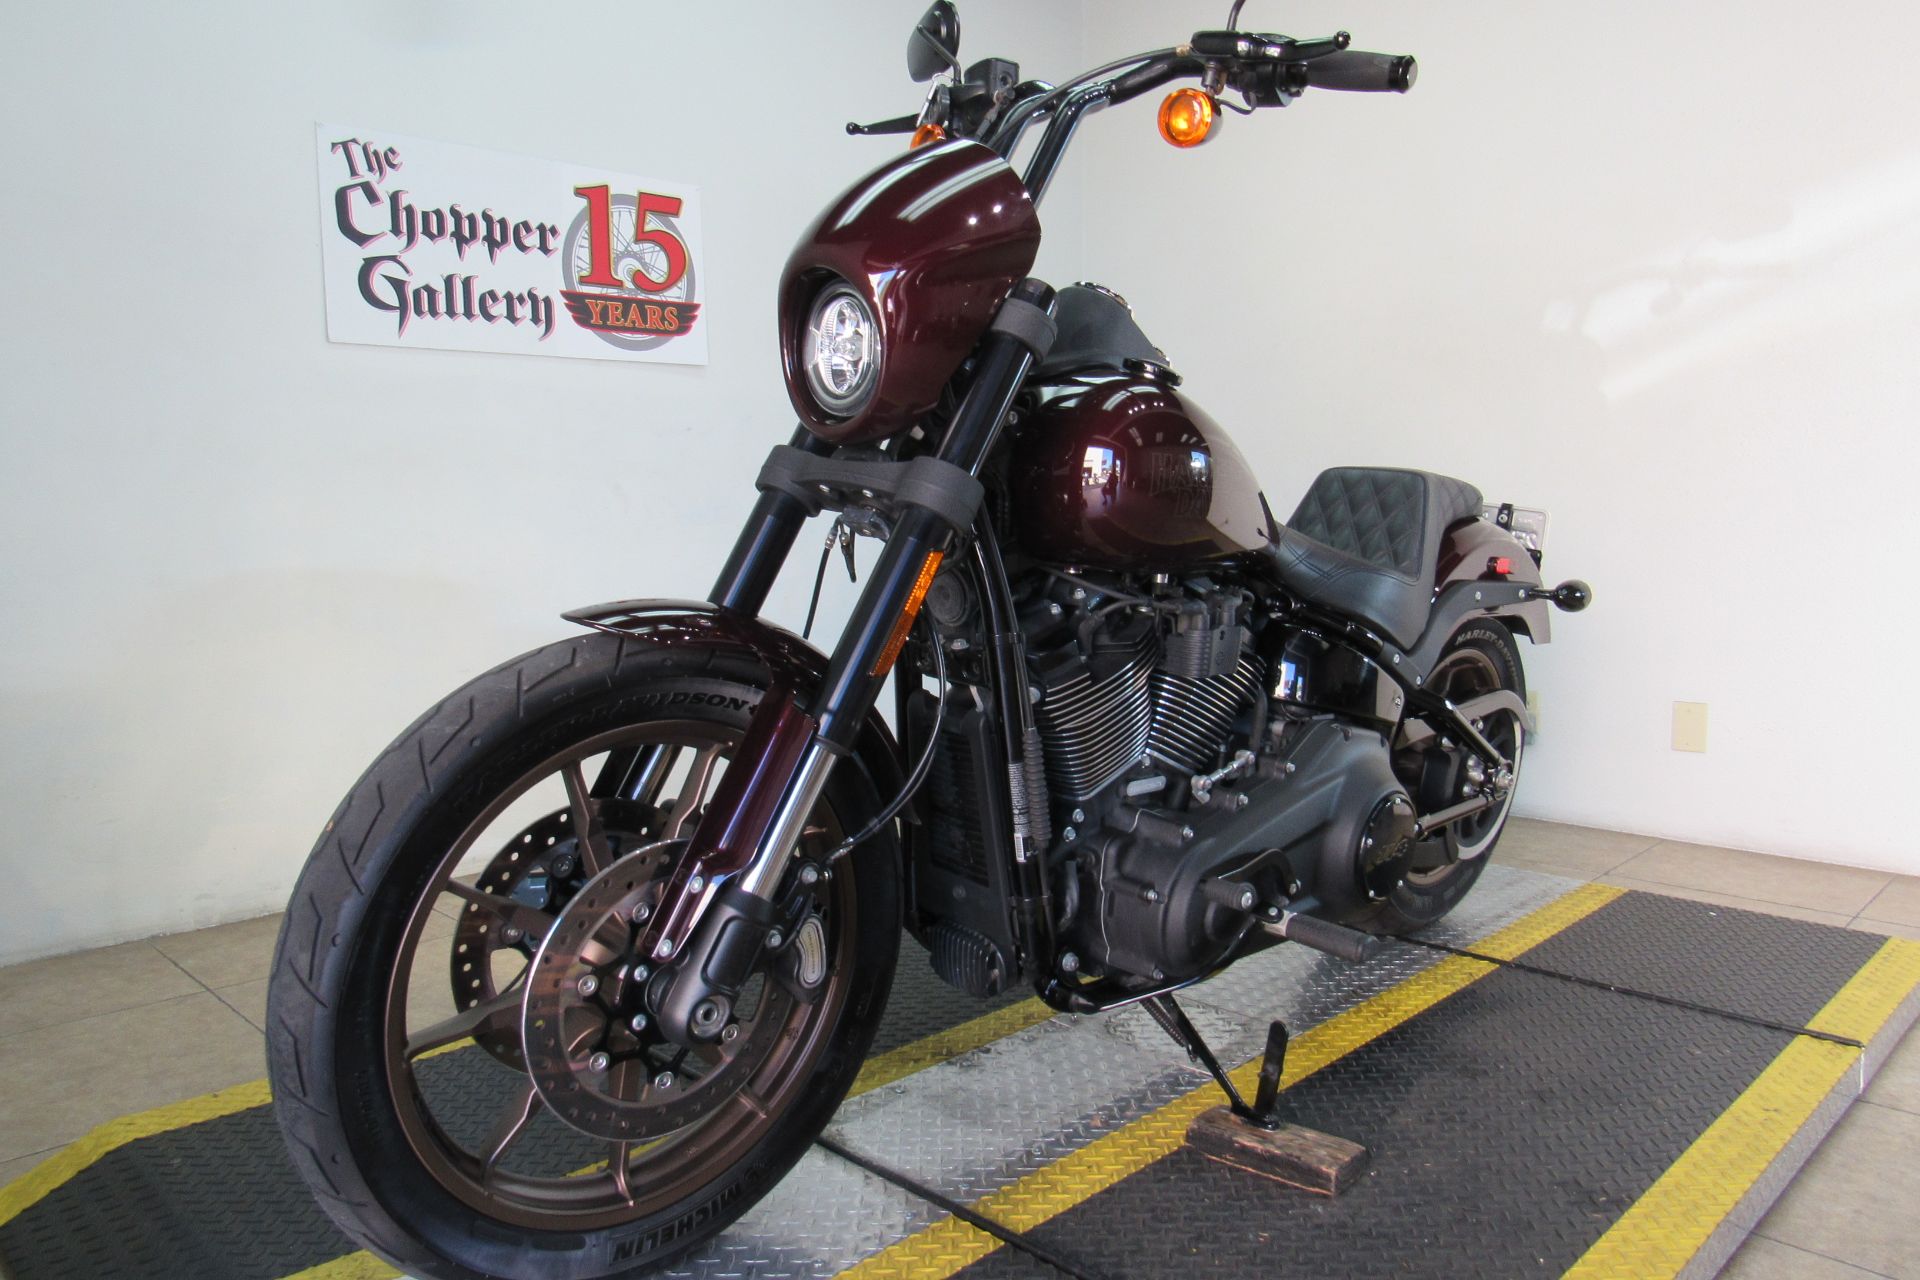 2021 Harley-Davidson Low Rider®S in Temecula, California - Photo 34